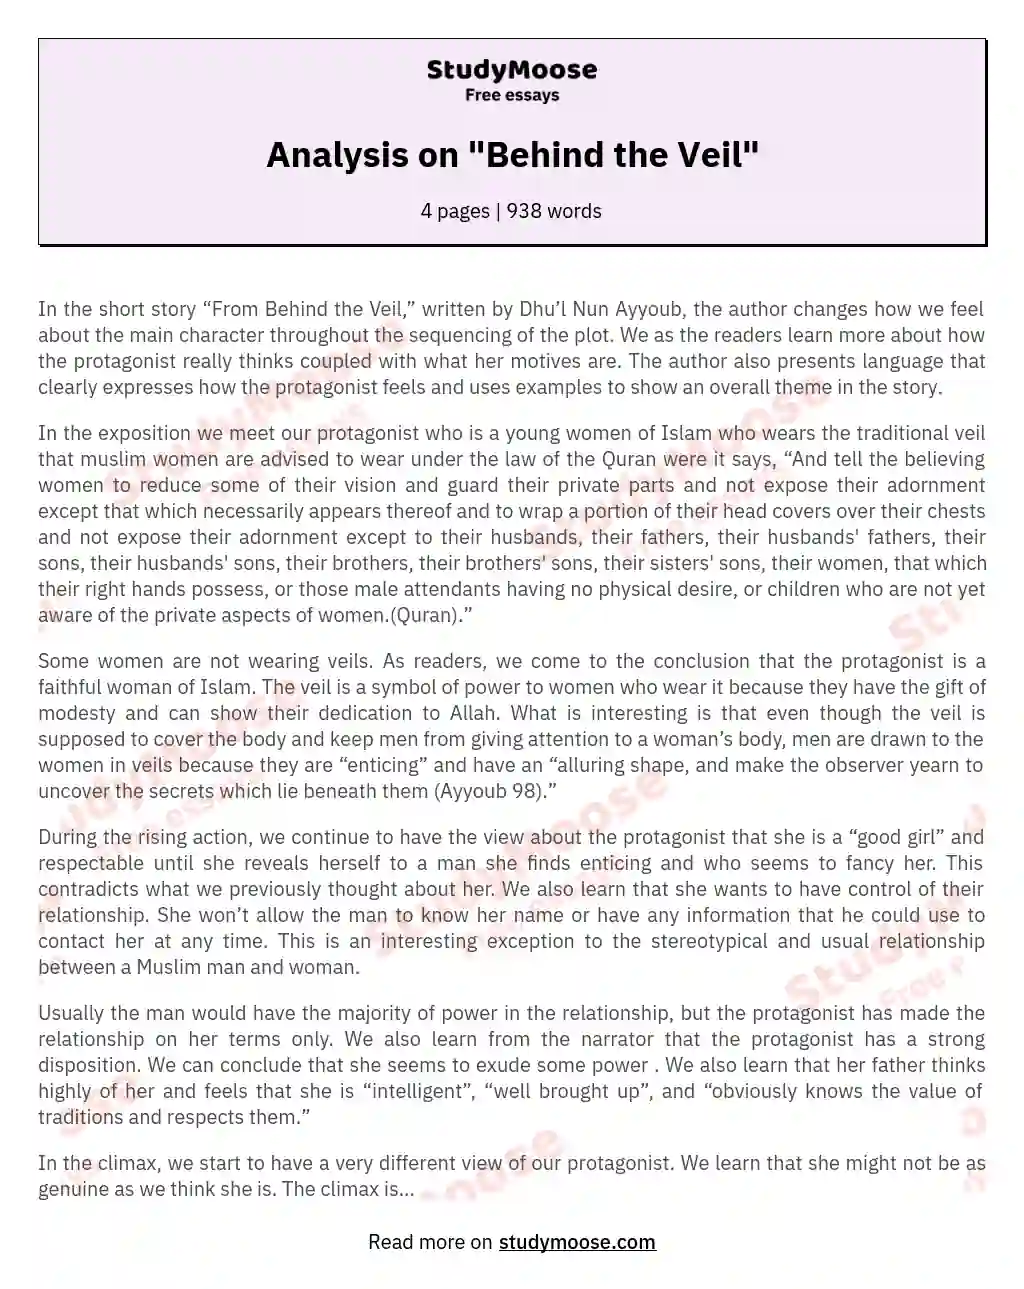 Analysis on "Behind the Veil" essay